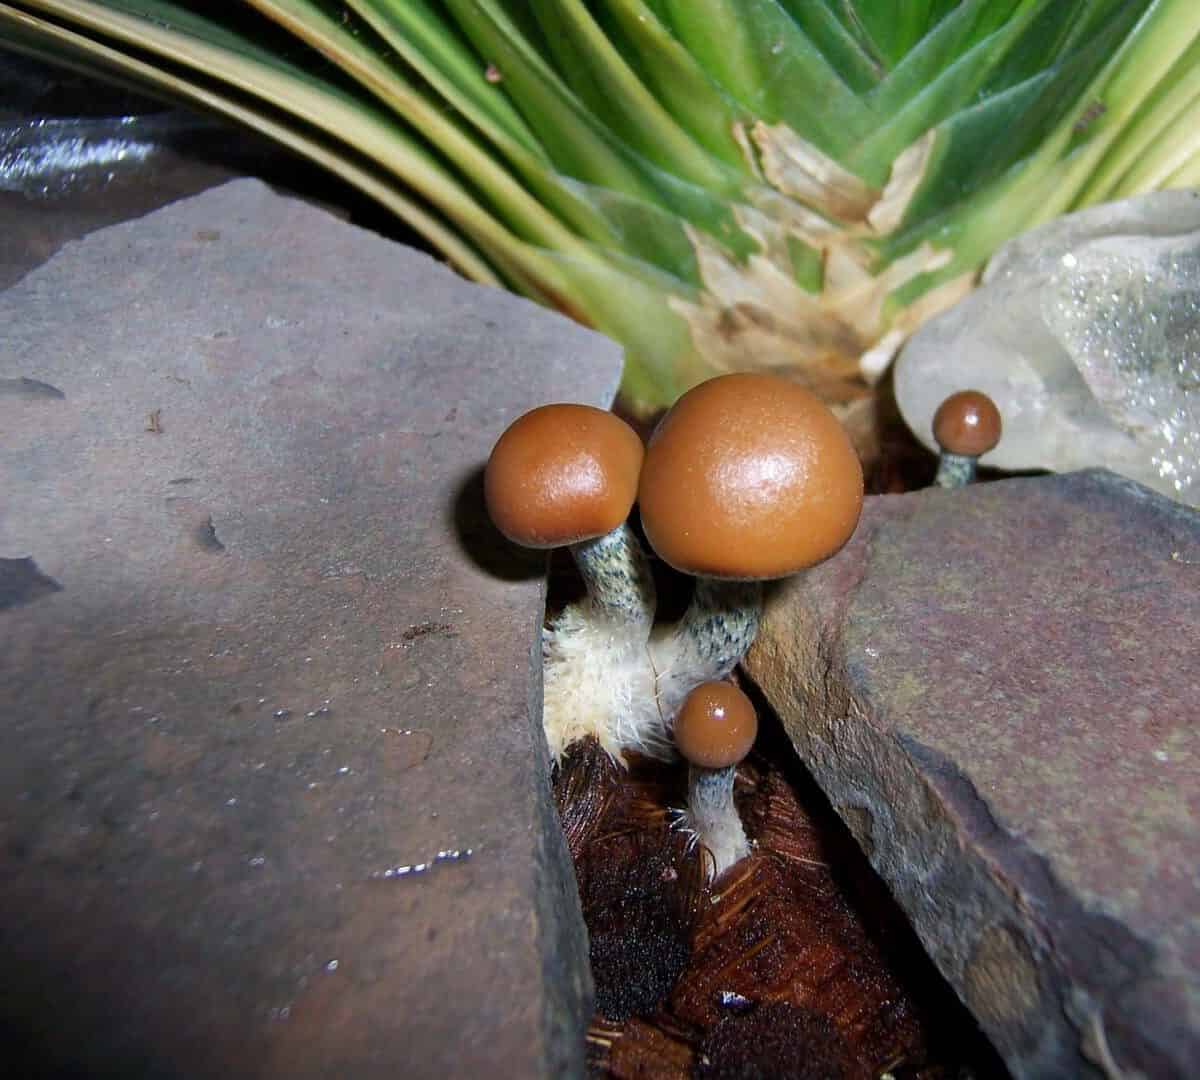 Plantasia Mystery Magic Mushroom scaled